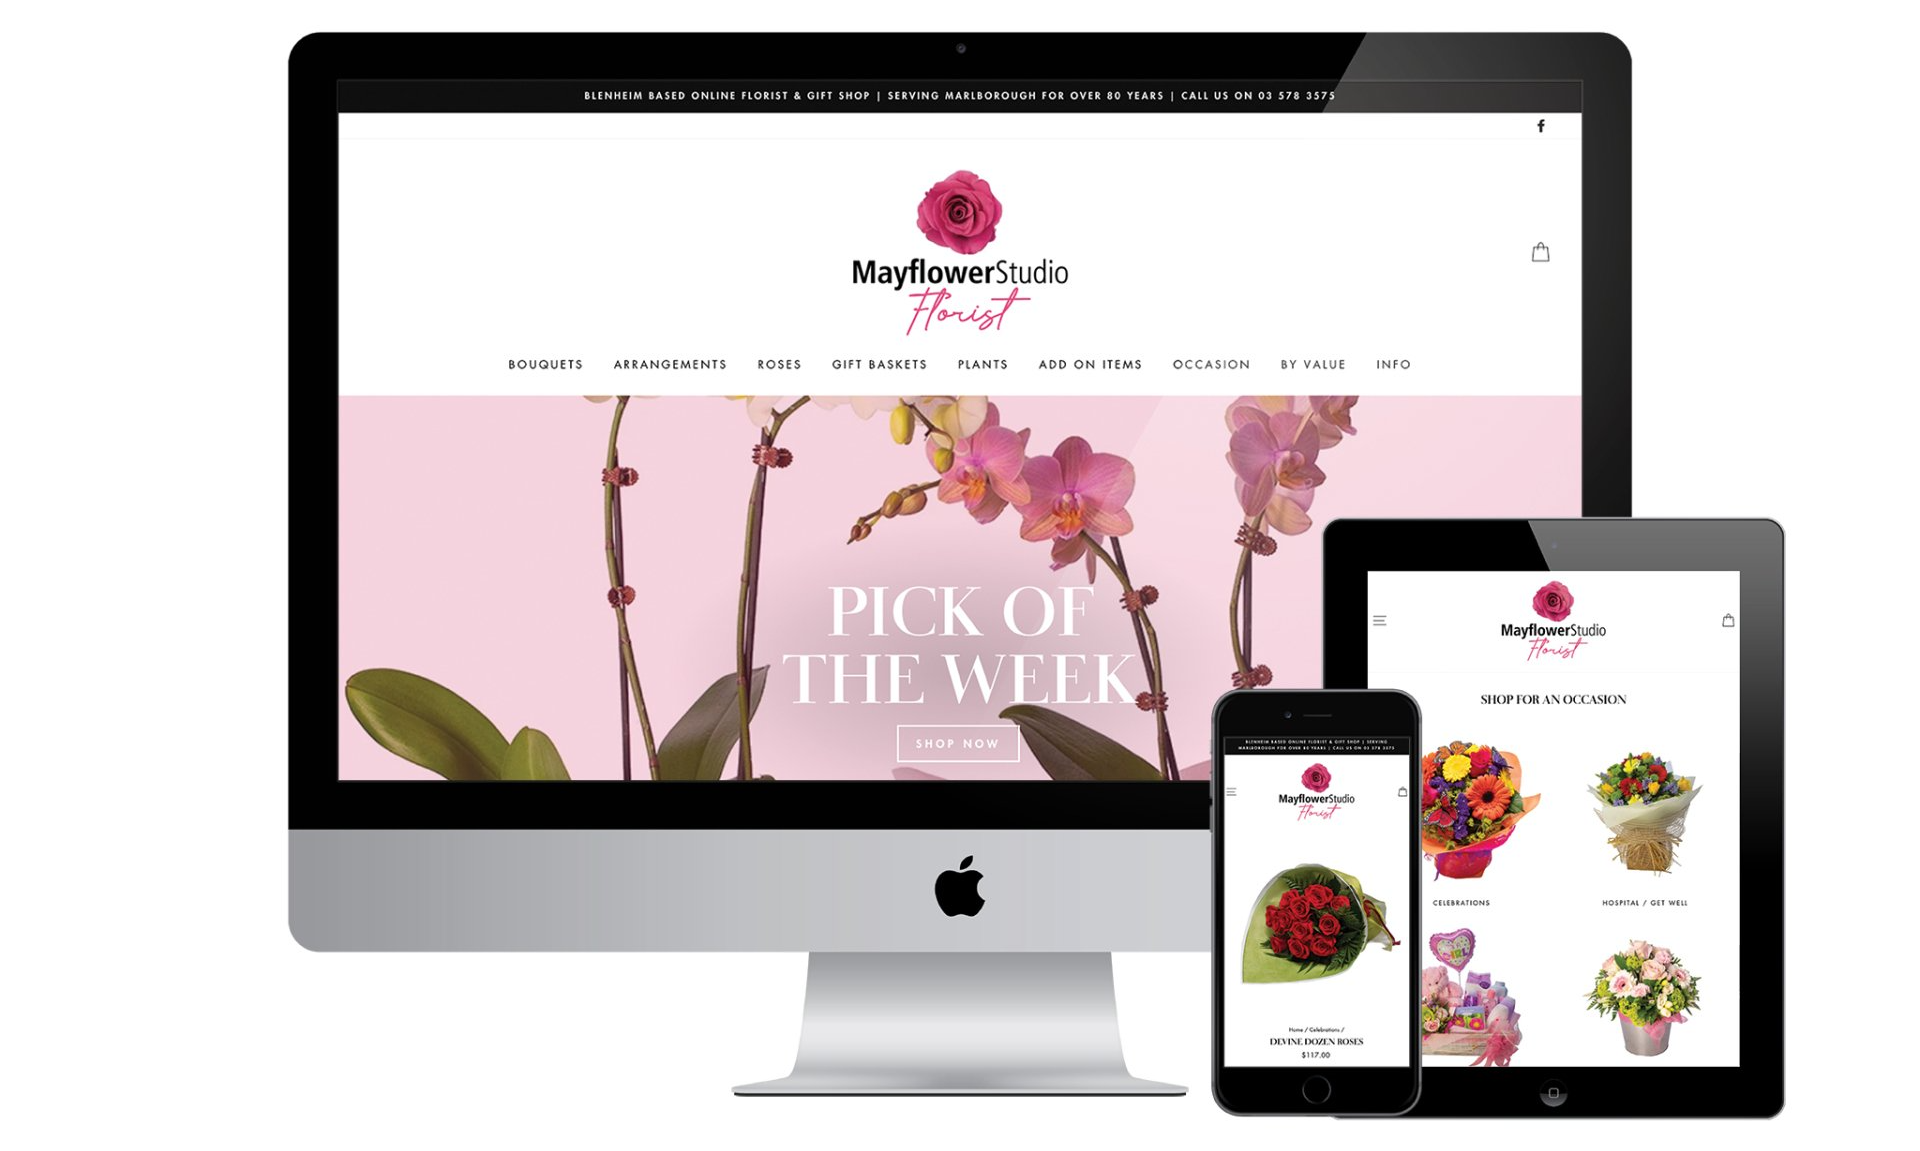 Mayflower Studio website designed by Vanilla Hayes creative graphic design  studio in Blenheim, Marlborough, New Zealand